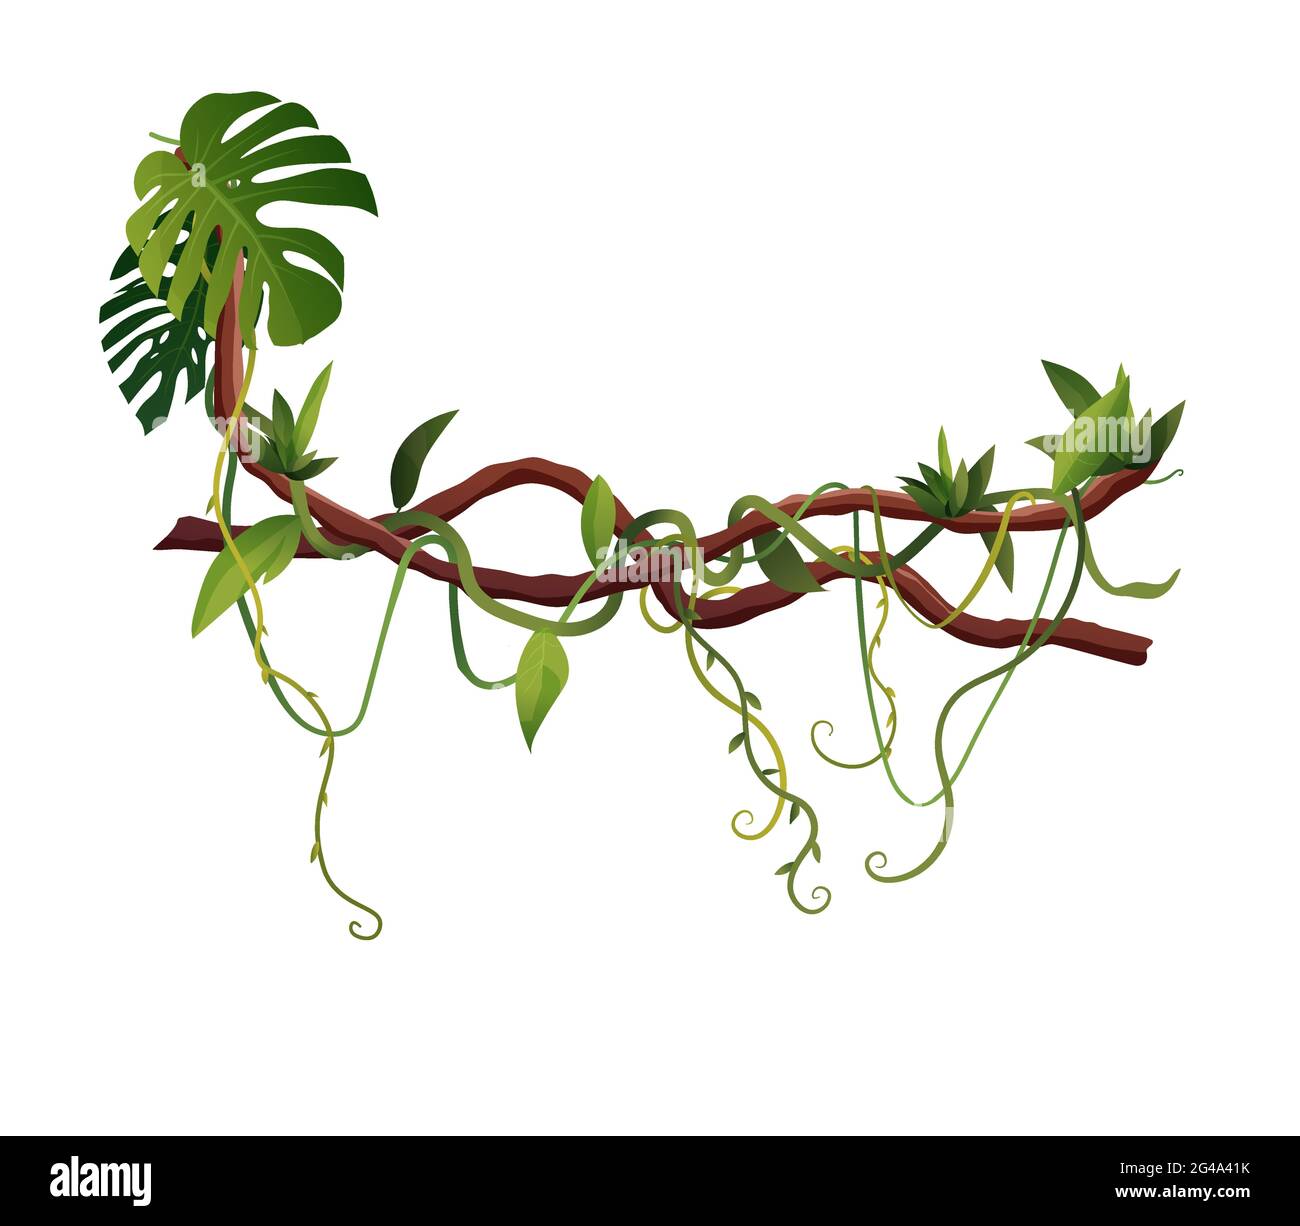 Liana or vine winding branches cartoon vector illustration. Jungle tropical climbing plants. Stock Vector